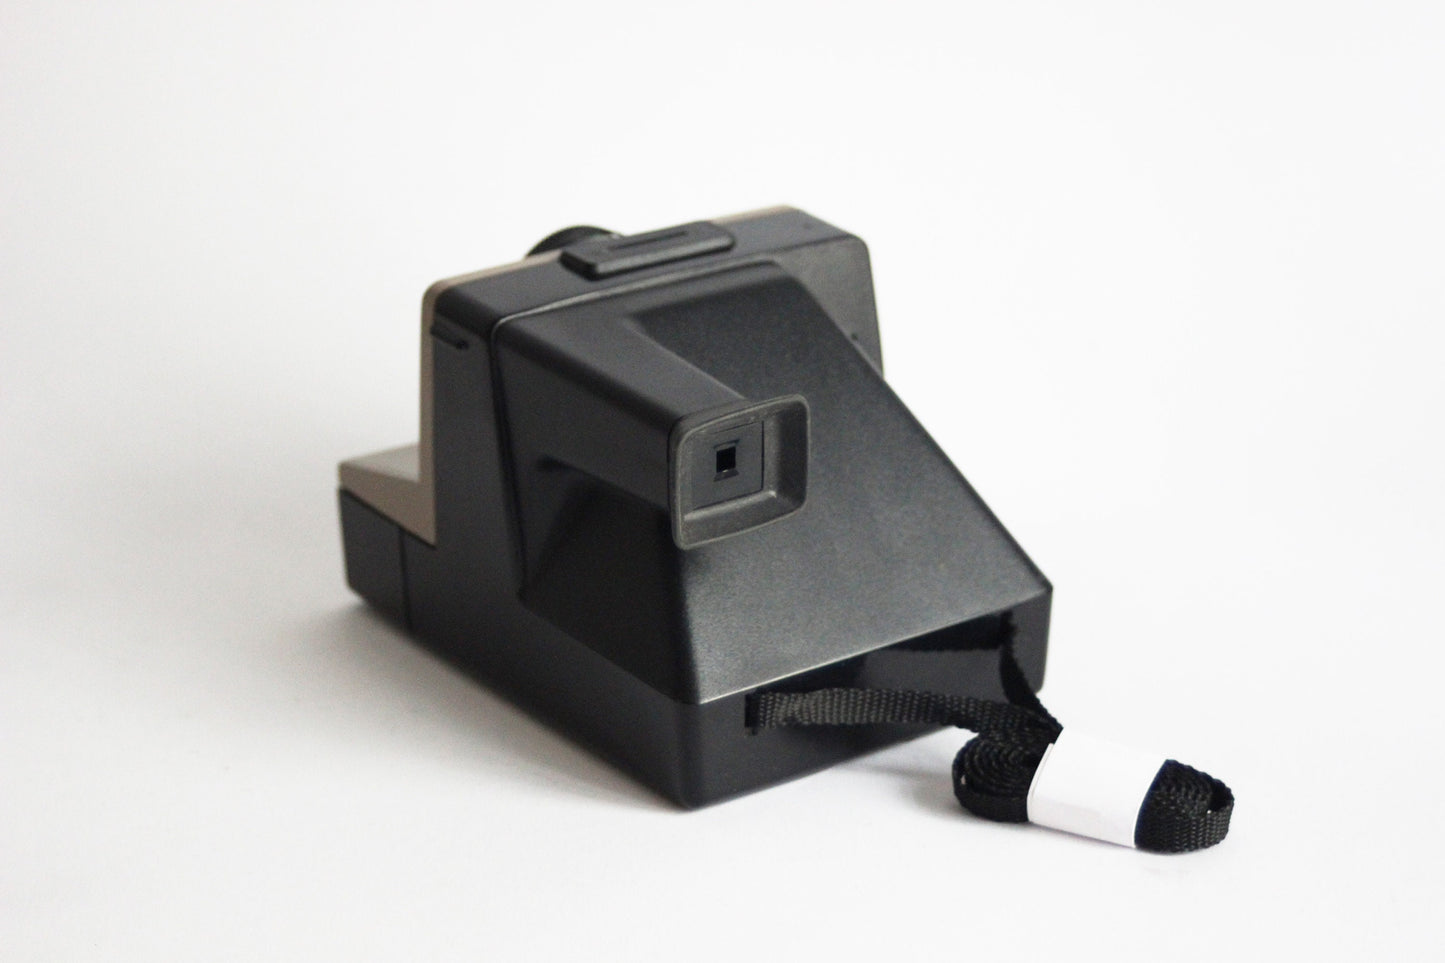 Polaroid 1500 Land Camera - Brown body with green shutter button